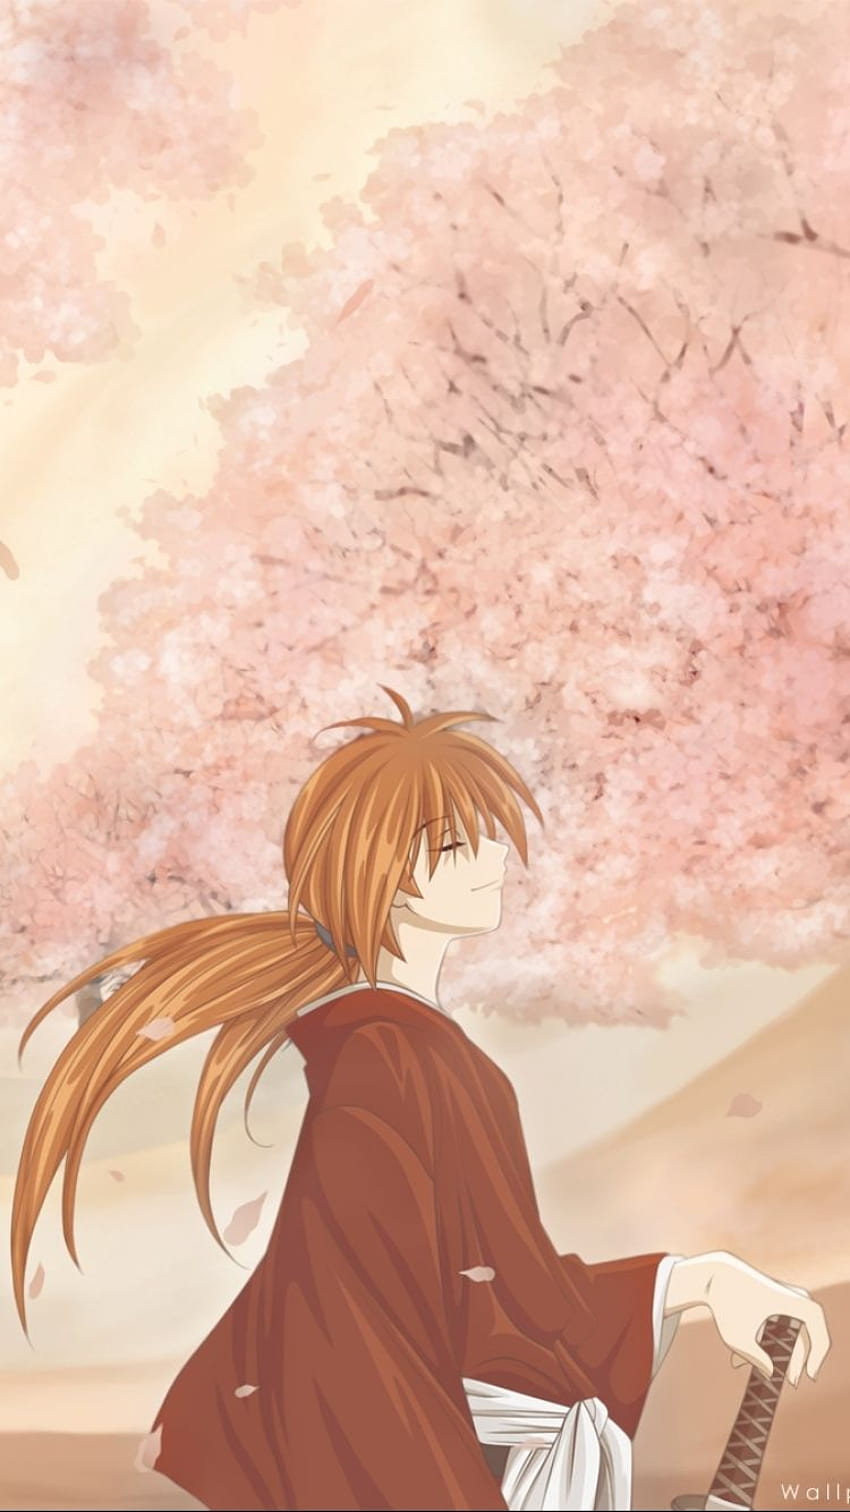 Wallpaper ID 360187  Anime Rurouni Kenshin Phone Wallpaper Kenshin Himura  1080x2340 free download